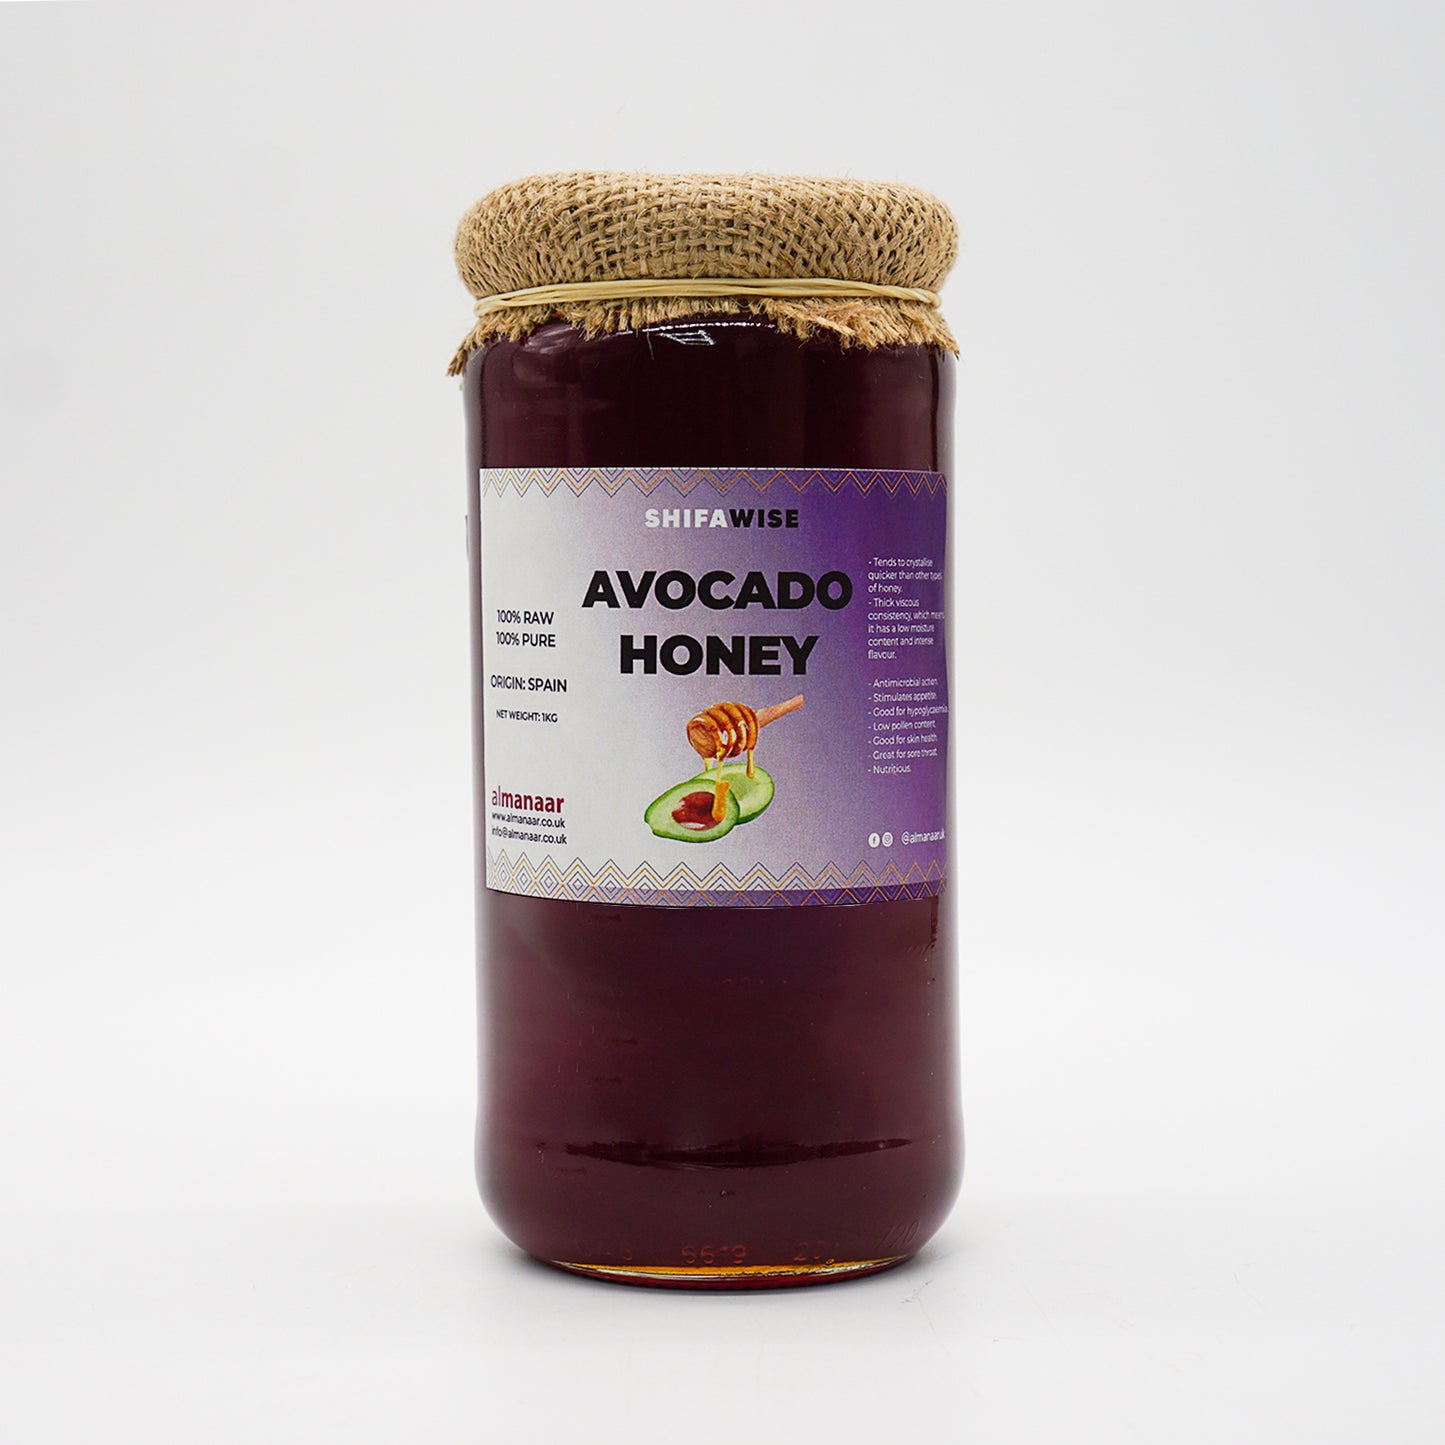 Shifawise 100% Pure Avocado Honey